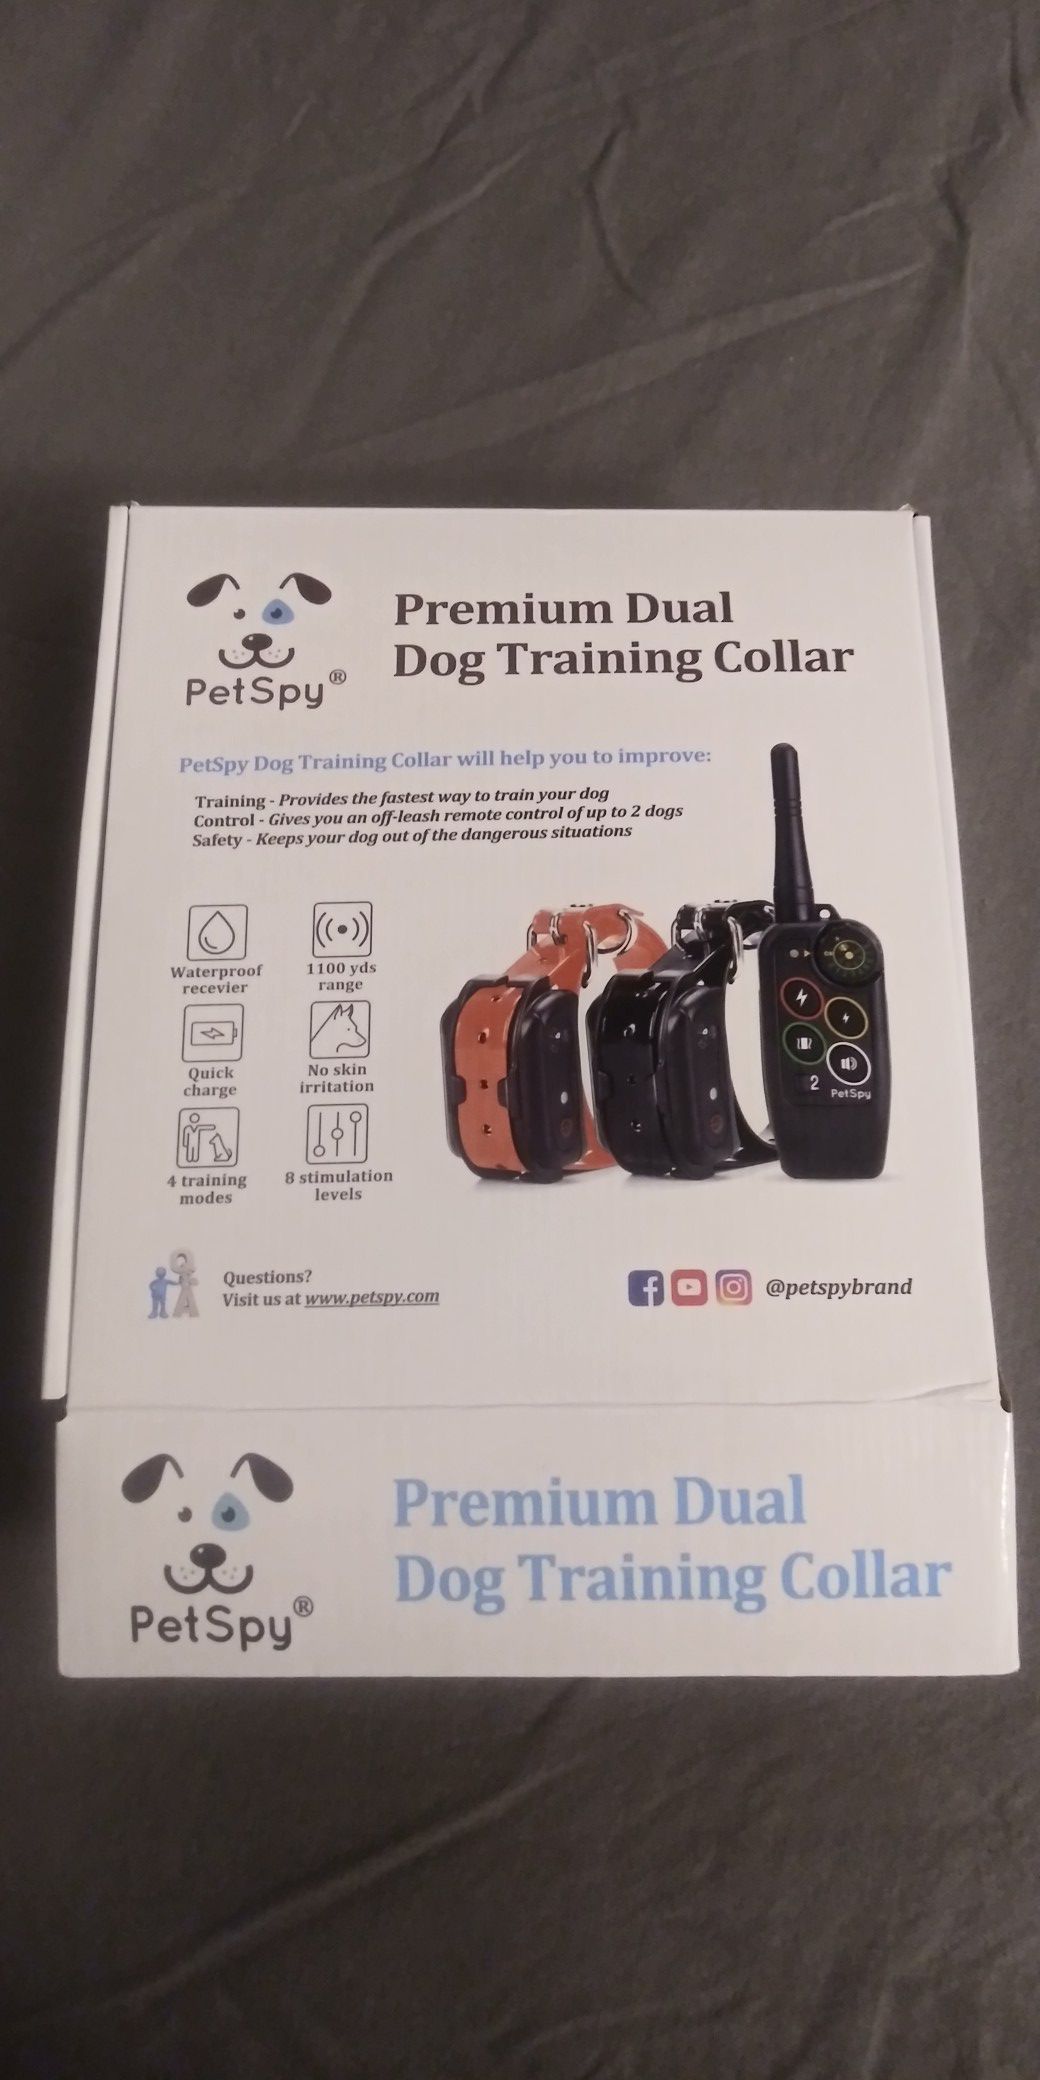 Used 2x PetSpy 2 Collar Premium Dual Dog Training